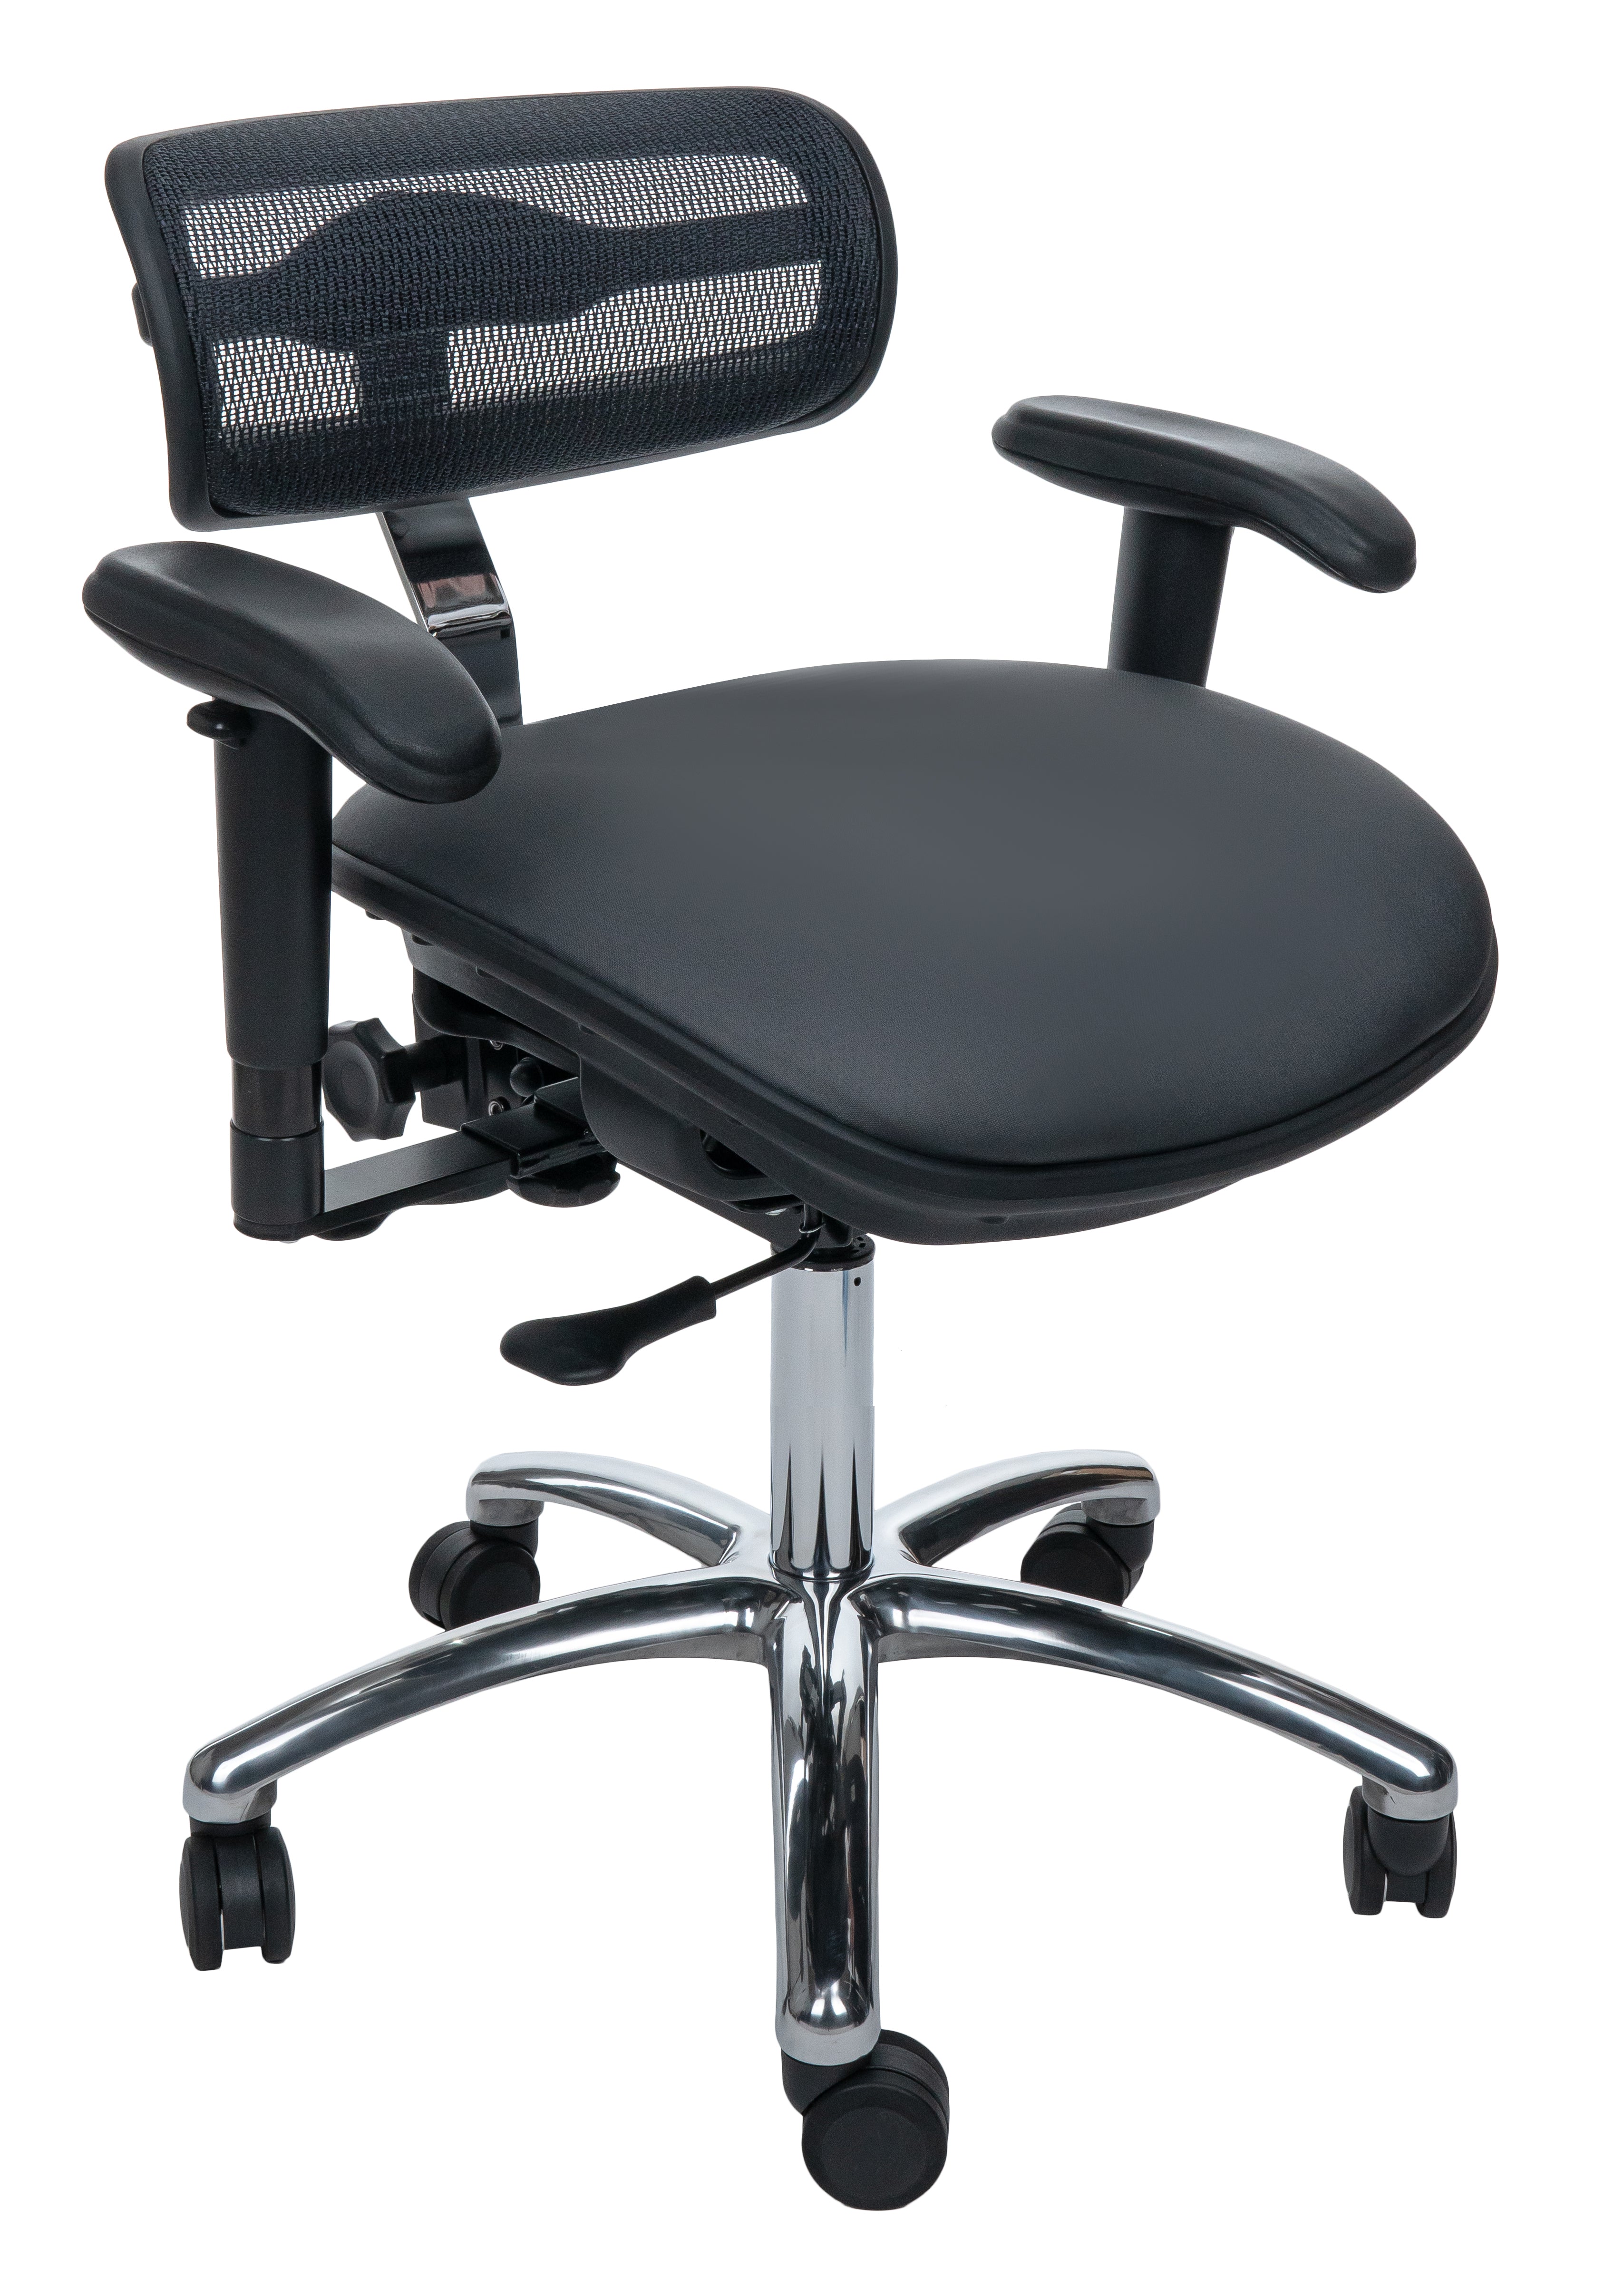 Custom-Fit Ergonomic Chairs - Build Your Own STP Chair with Ergolab –  ErgoLab